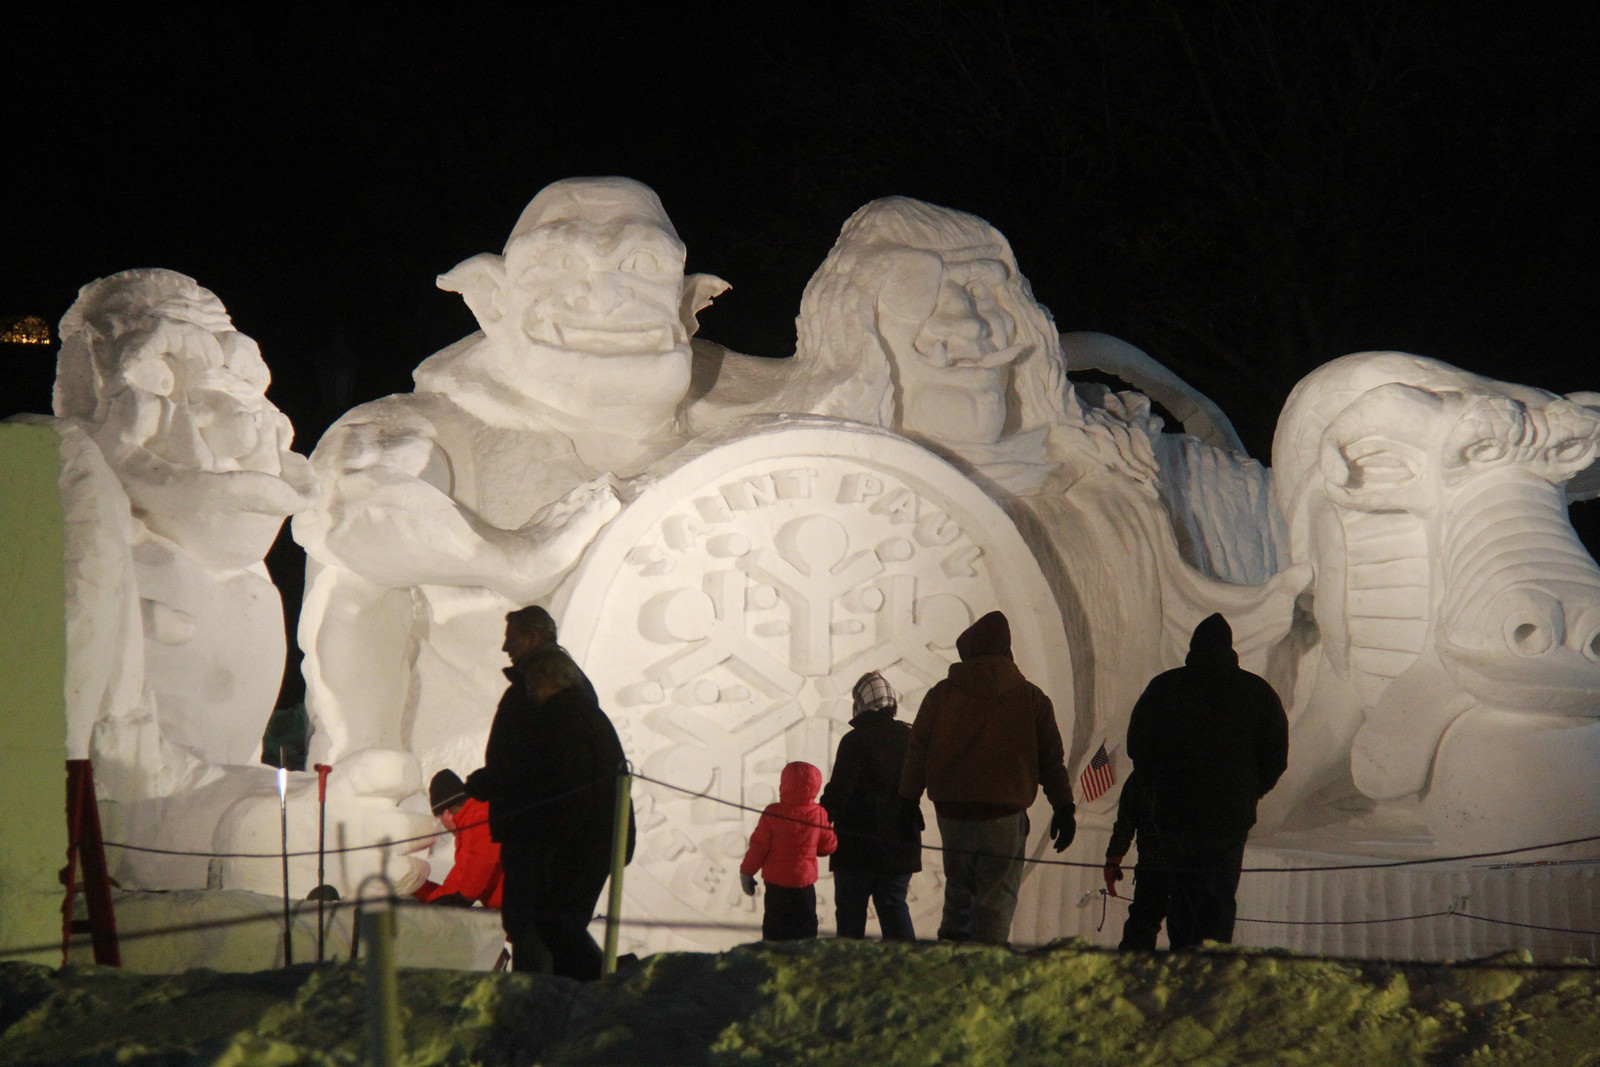 Snow Park - Snow Image with people